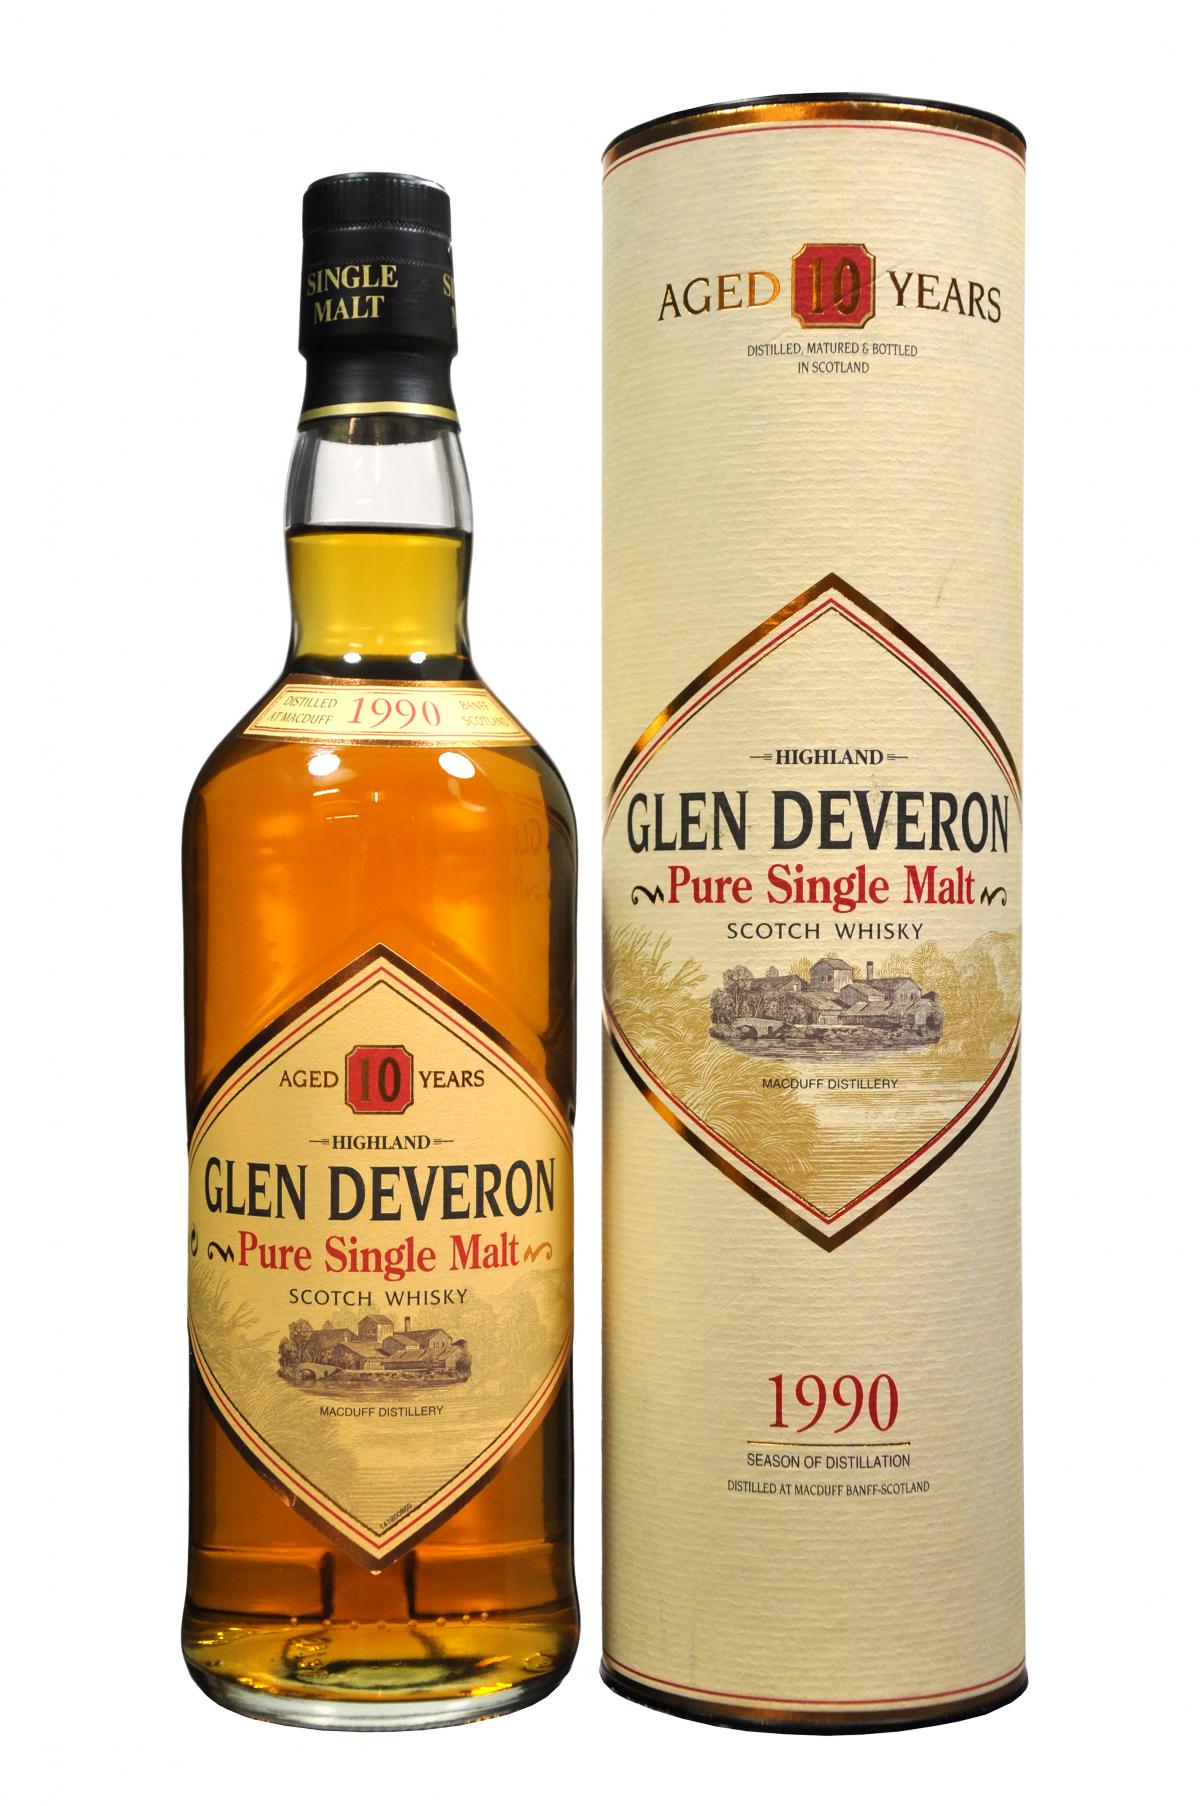 glen deveron 1990, 10 Yyear old, highland single malt scotch whisky